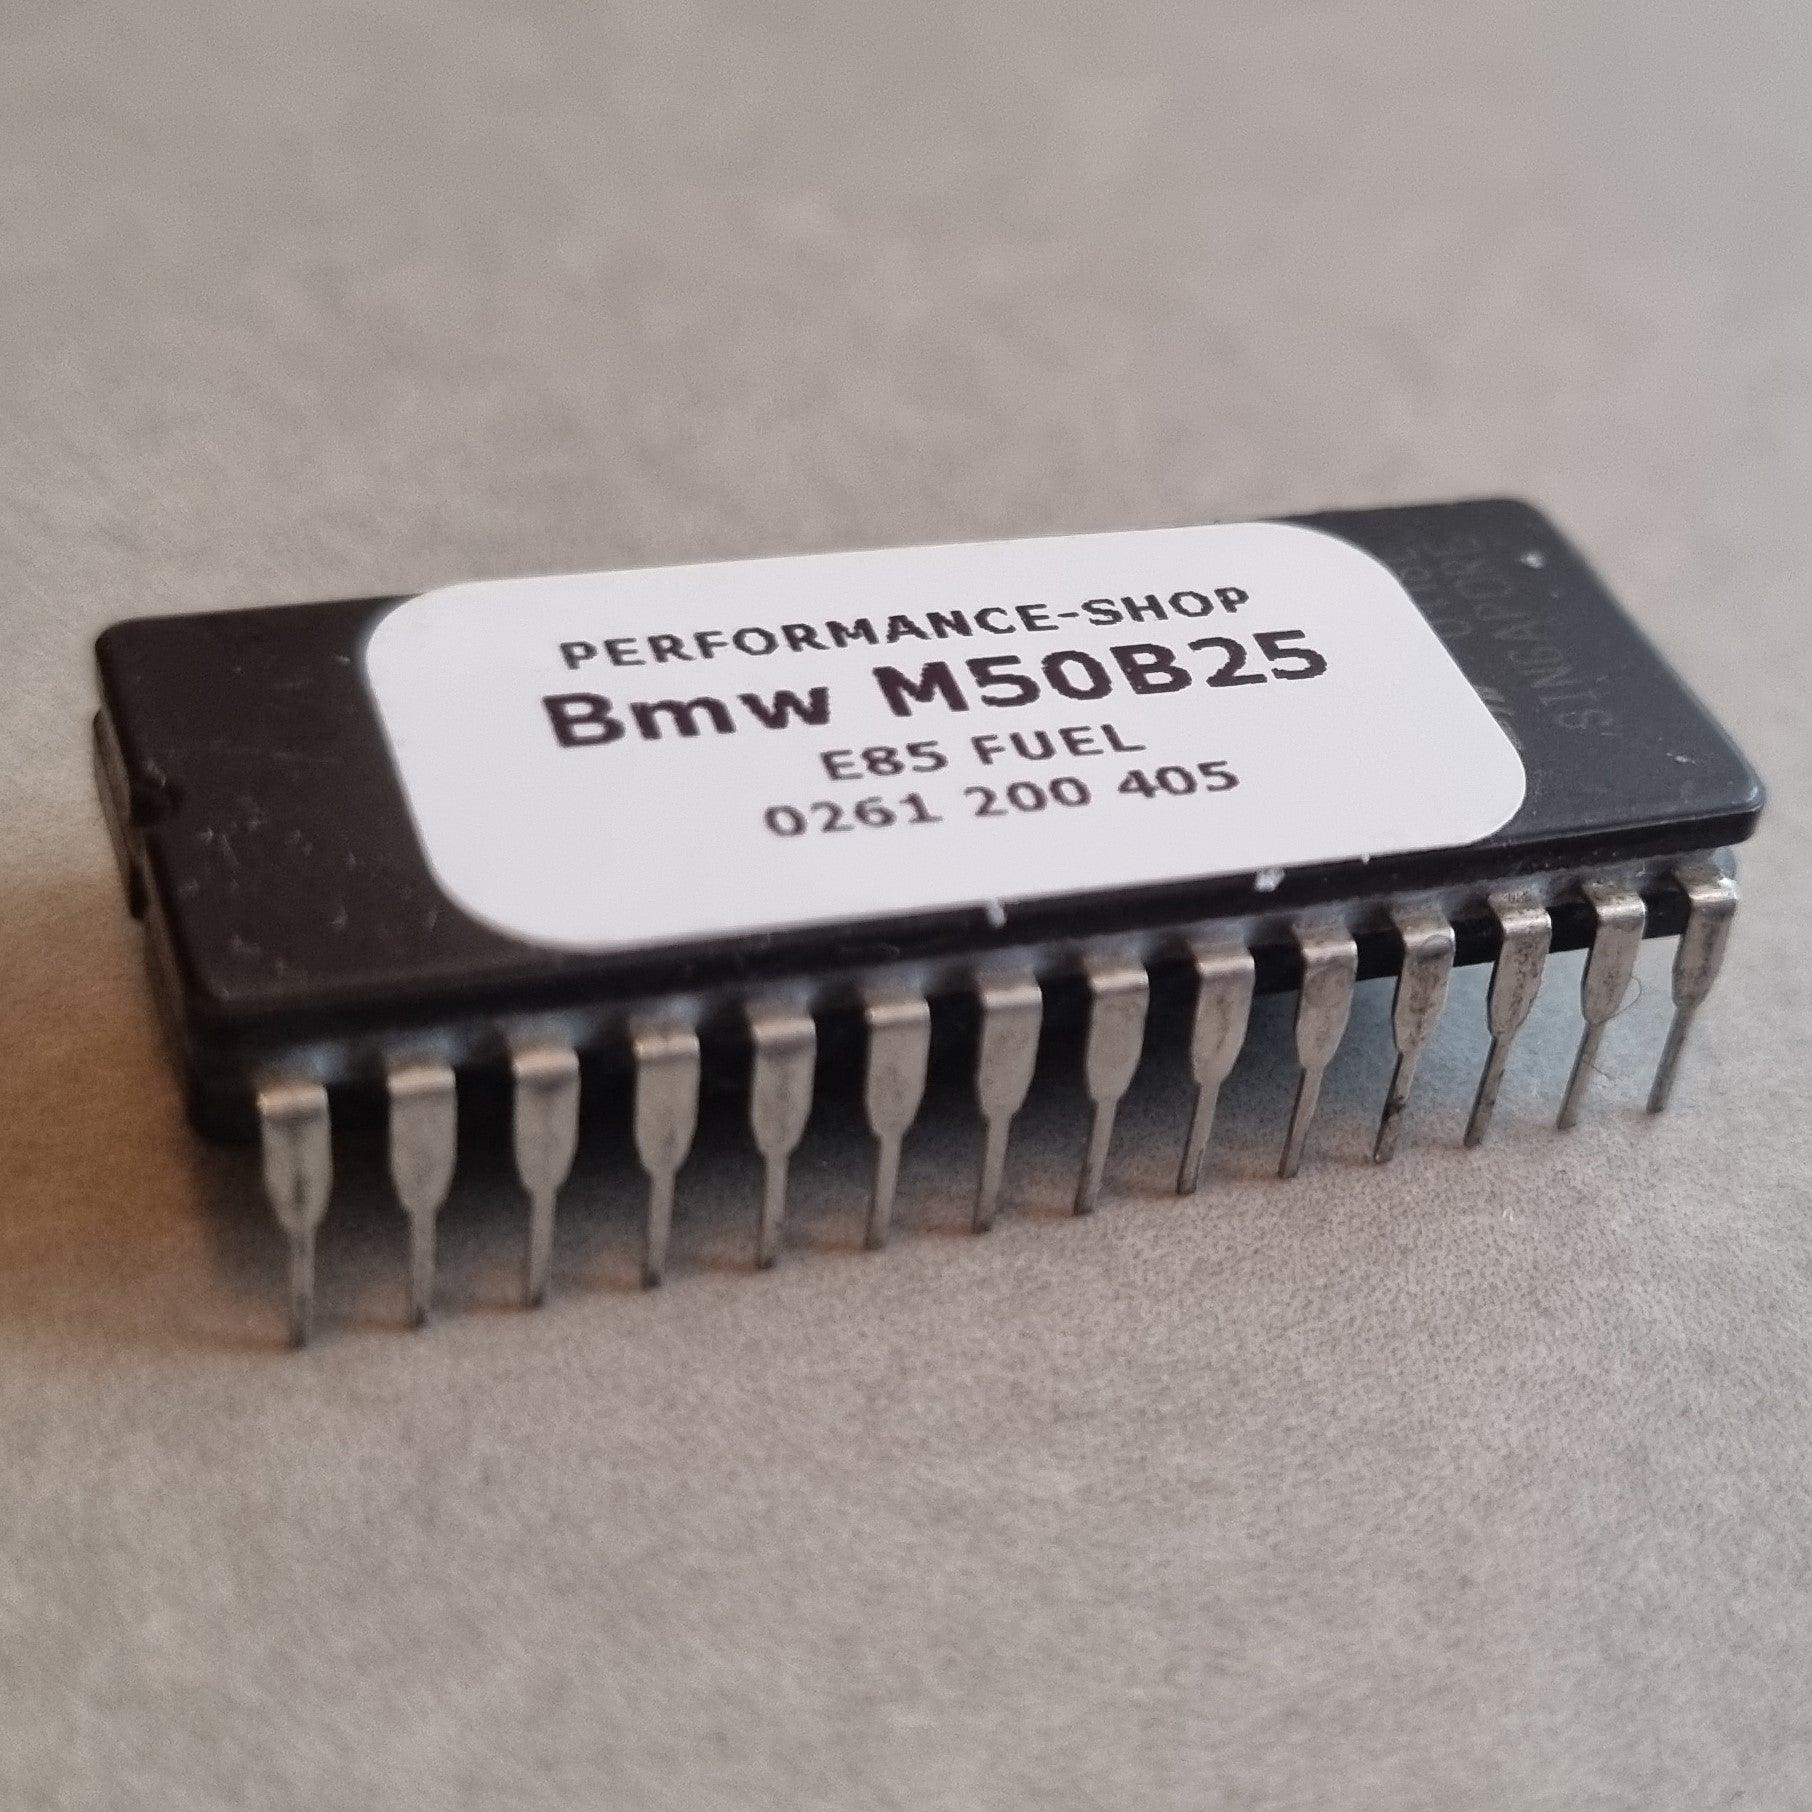 Reprogrammation E85 - BMW E36 325I / E34 525I - M50B25 (91 - 95)